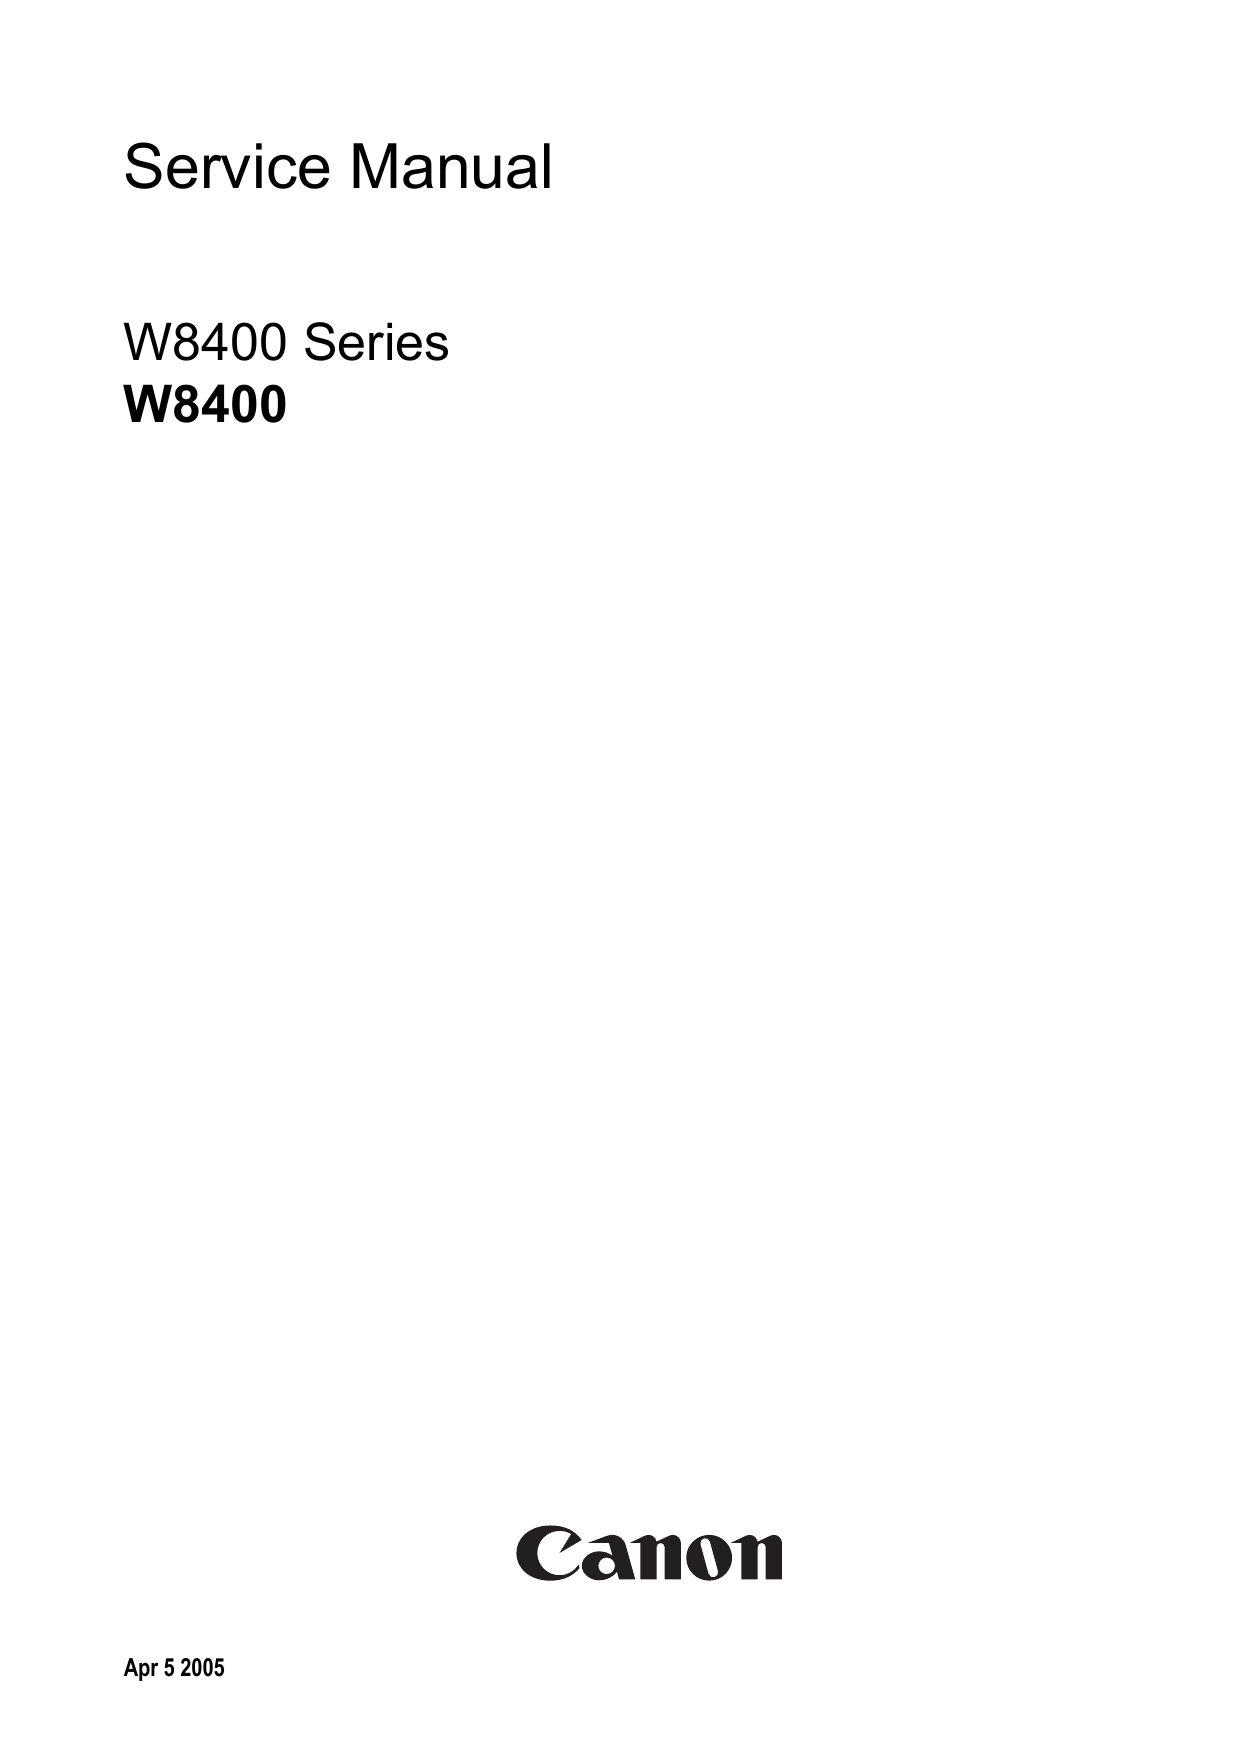 Canon W 8400 wide format printer service guide Preview image 6